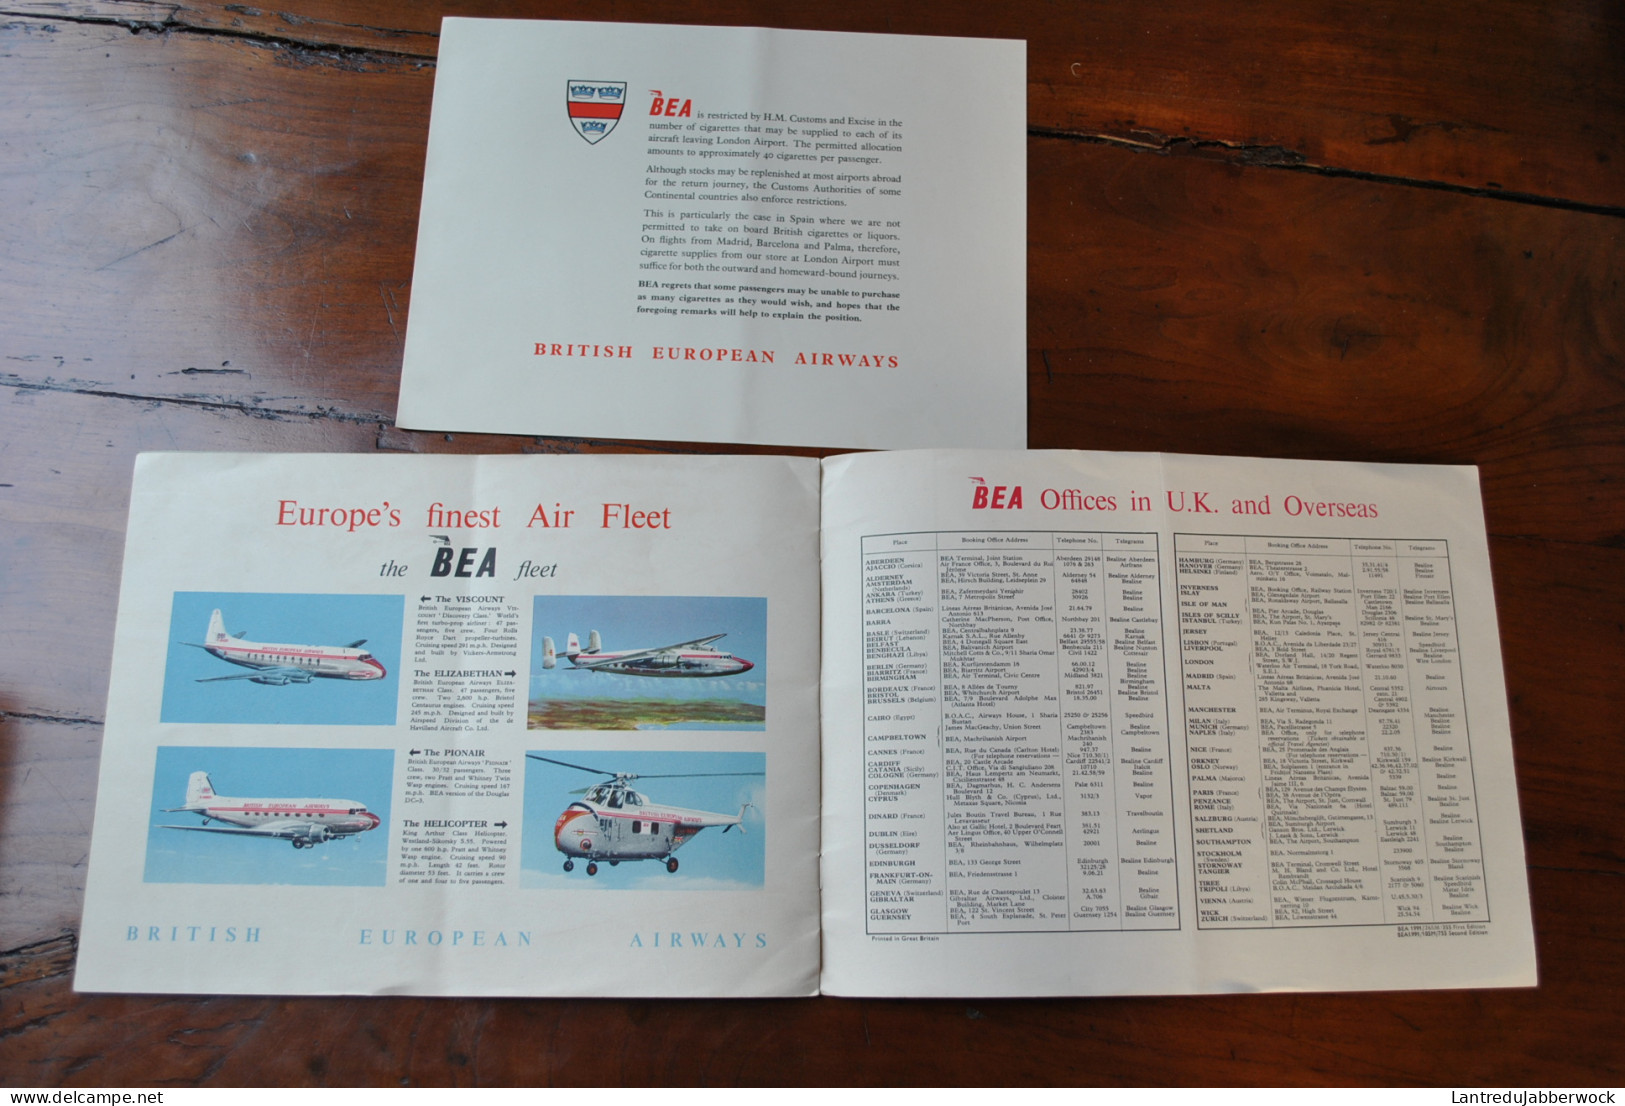 MAGAZINE BEA FLIGHT GUIDE BRITISH EUROPEAN AIRWAYS MAPS & INFORMATION PUBLICITE BP DUNLOP PETROLE ADVERTISING Avion - Advertisements